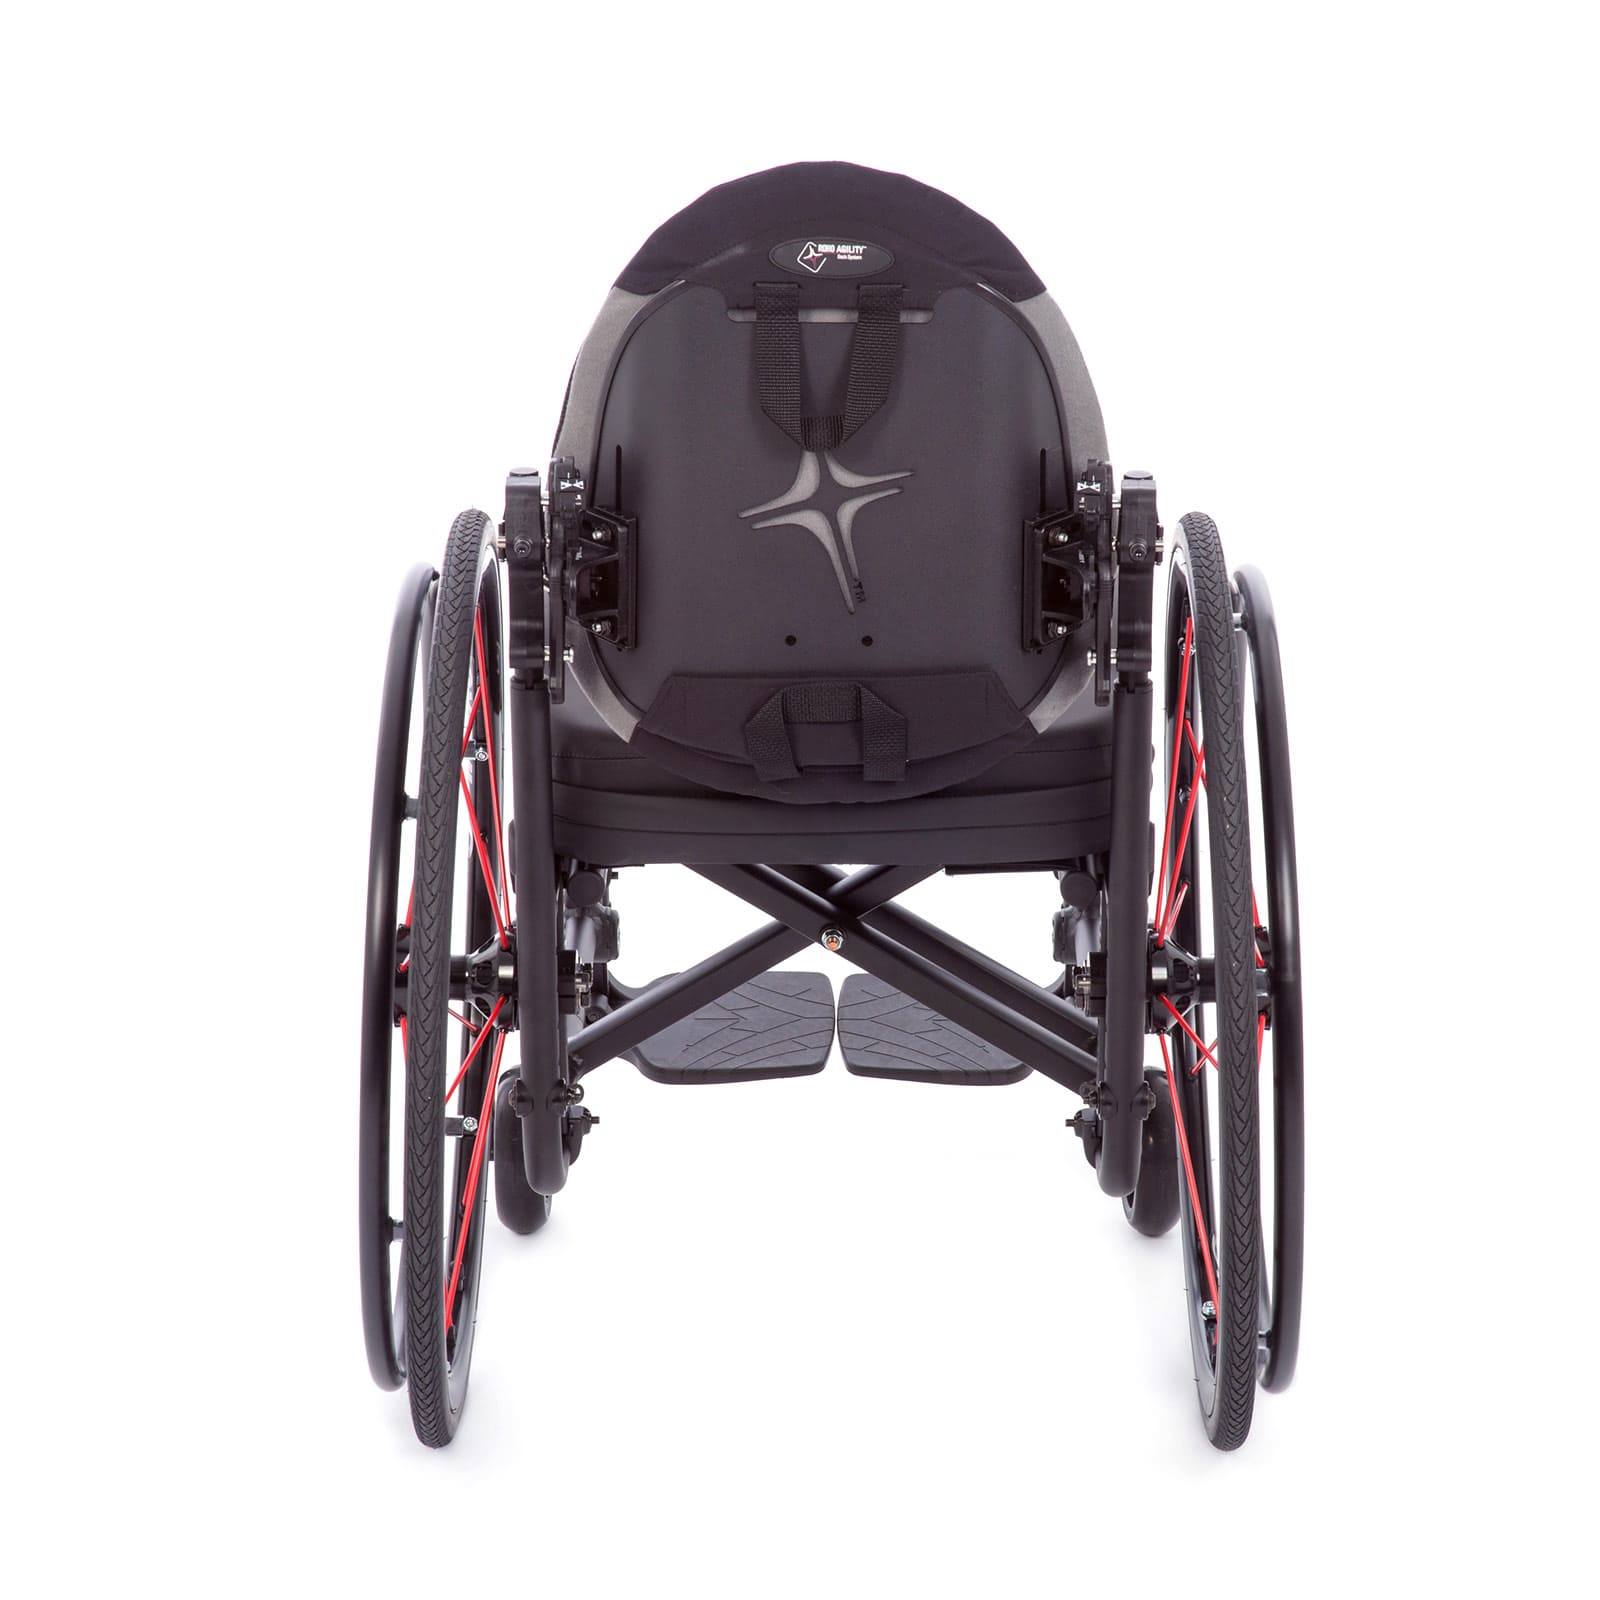 Permobil Ti Lite aero X aluminium wheelchair